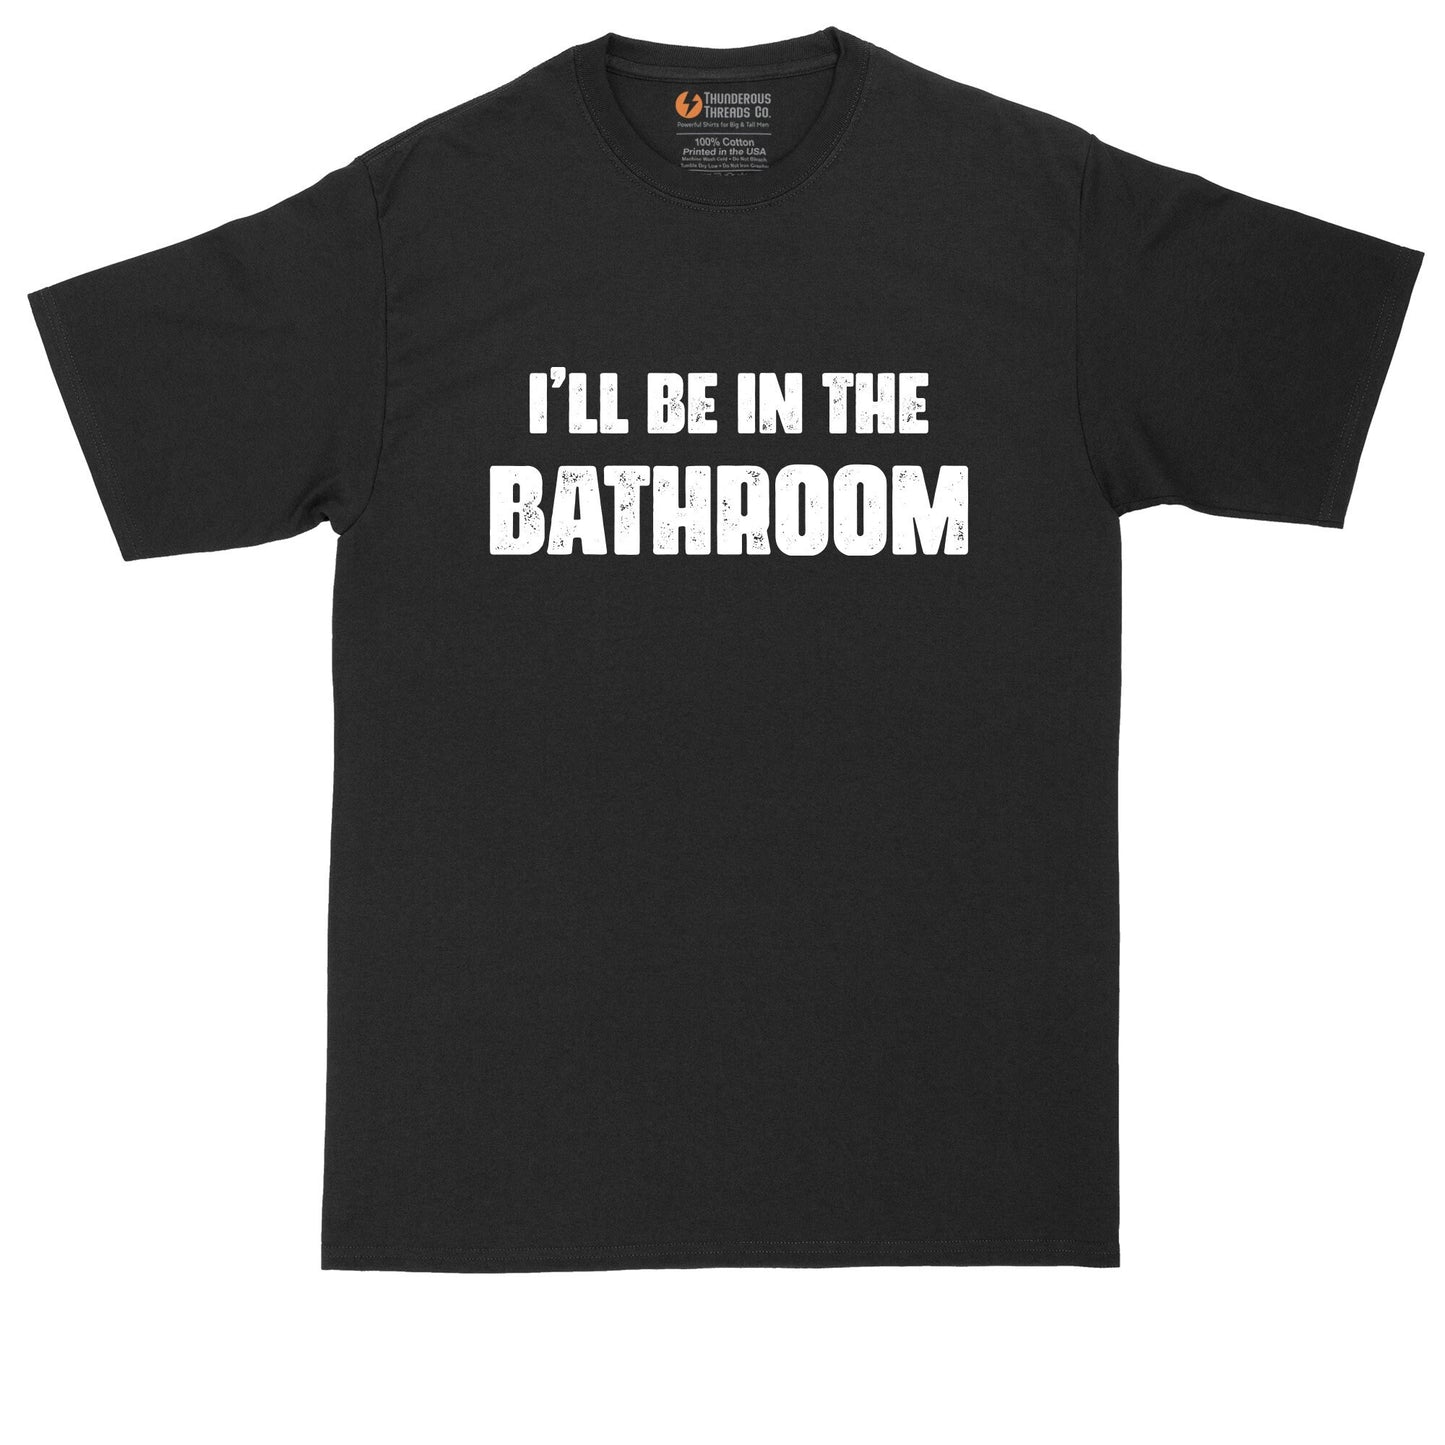 I'll Be in the Bathroom | Funny Shirt | Mens Big & Tall T-Shirt | Bathroom Humor